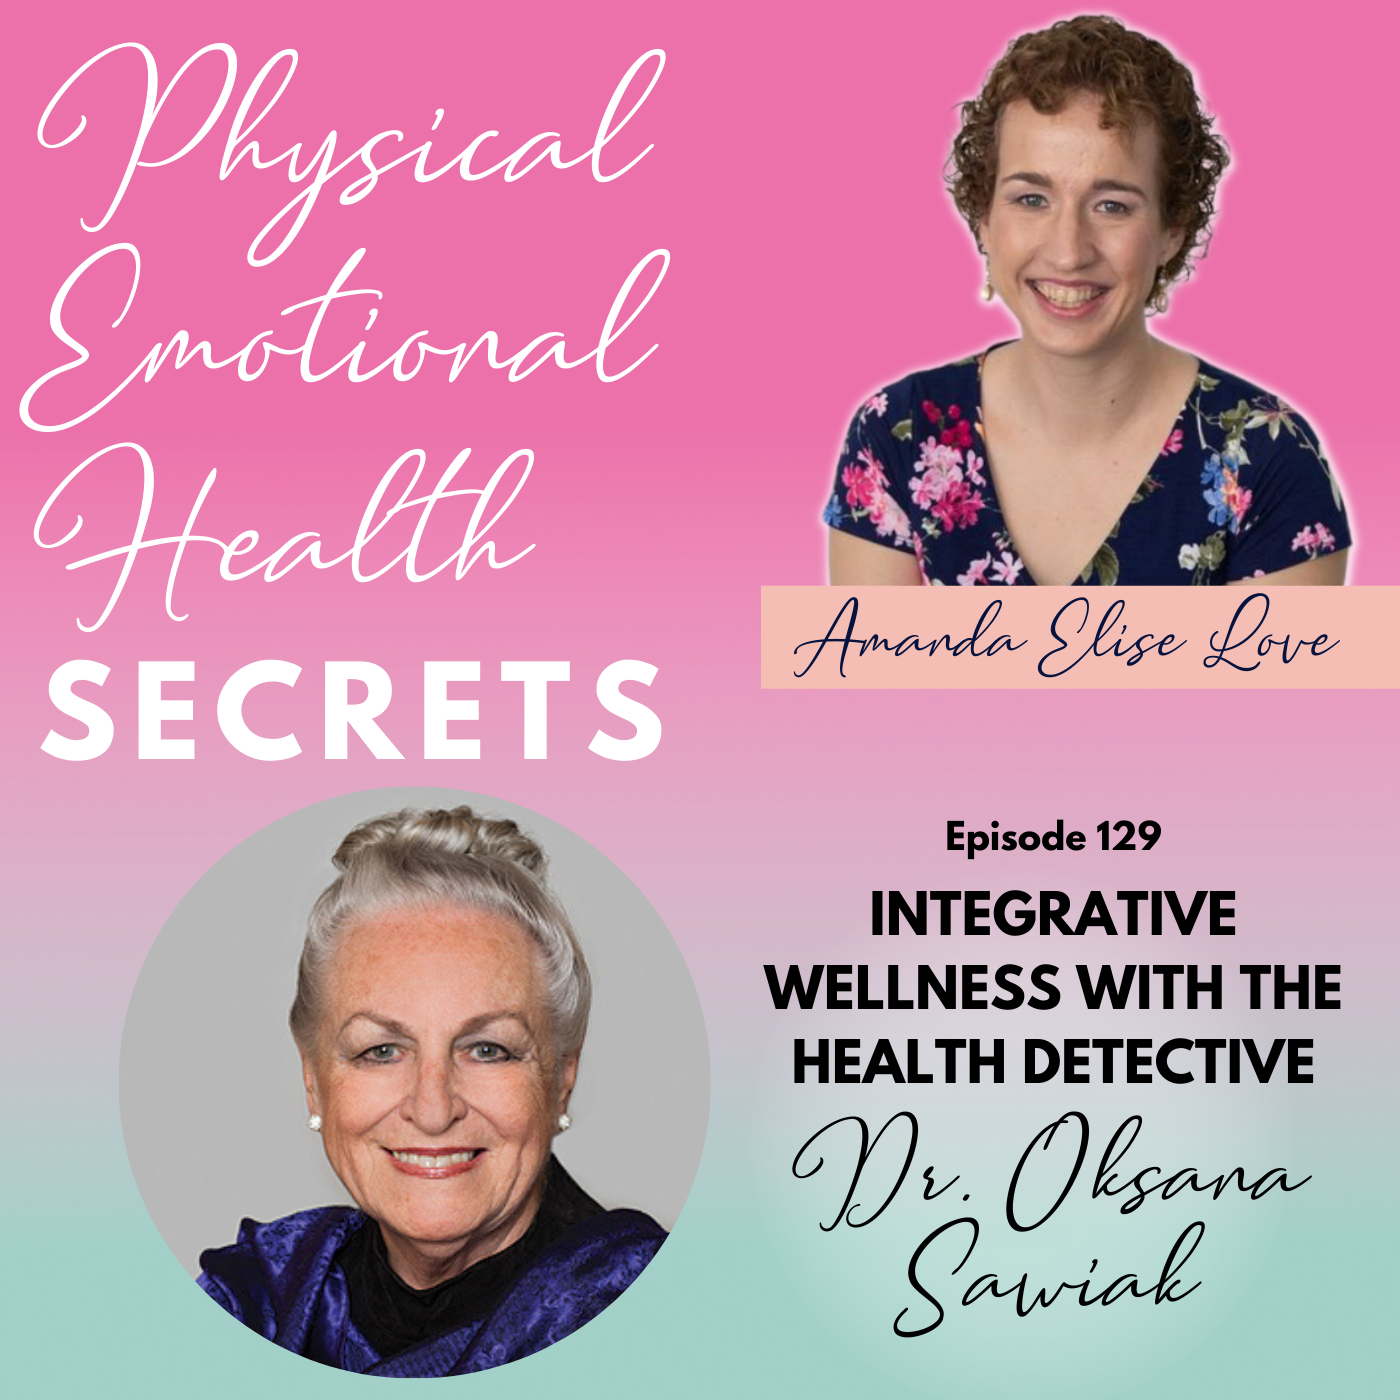 Episode 129: Integrative Wellness with the Health Detective, Dr. Oksana Sawiak